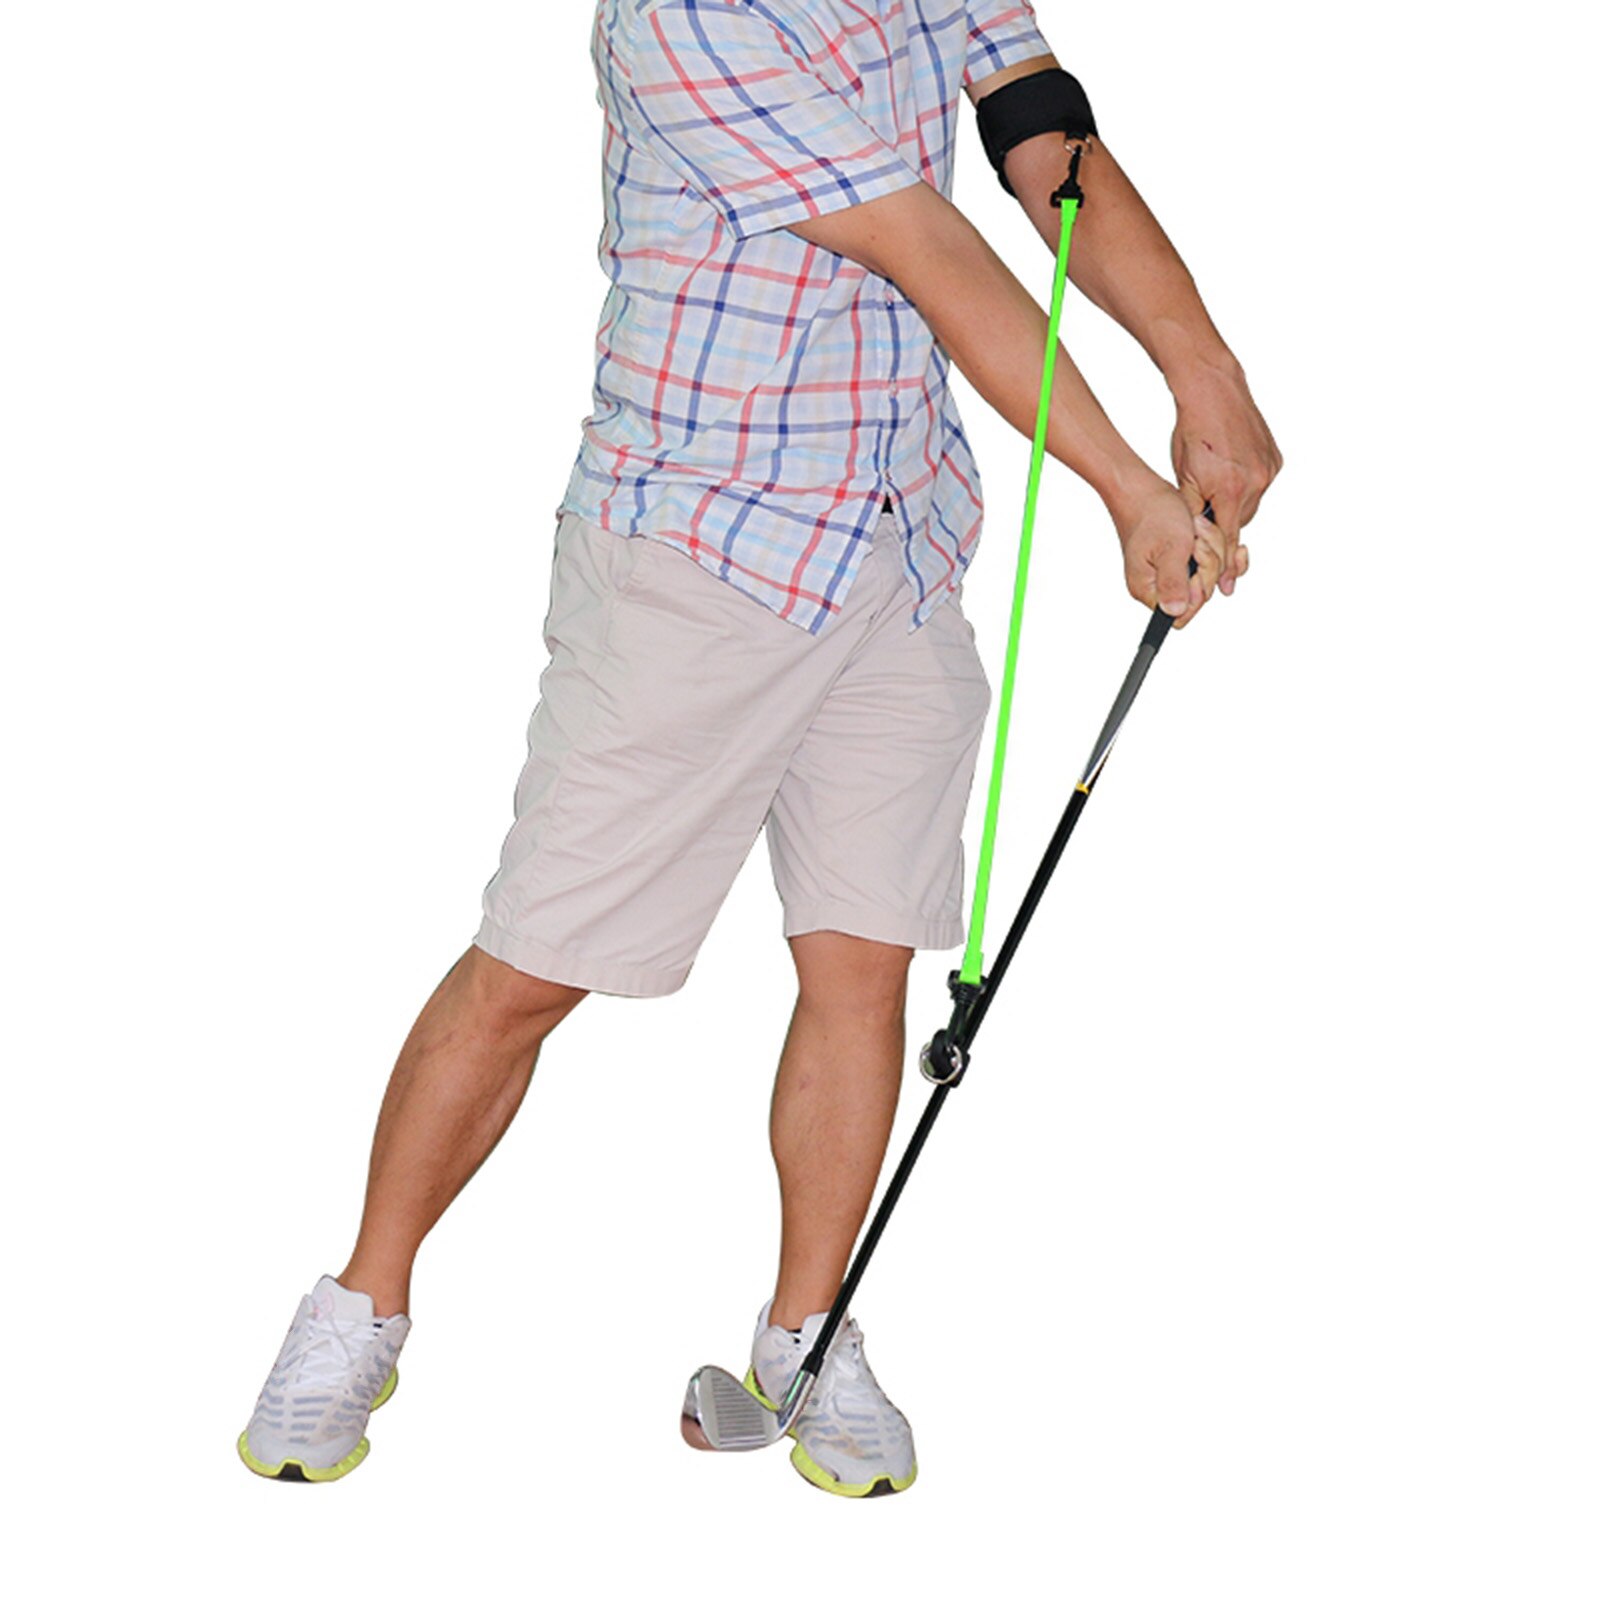 Golf Rechte Swing Praktijk Training Aids Elleboog Brace Arm Band Trainer